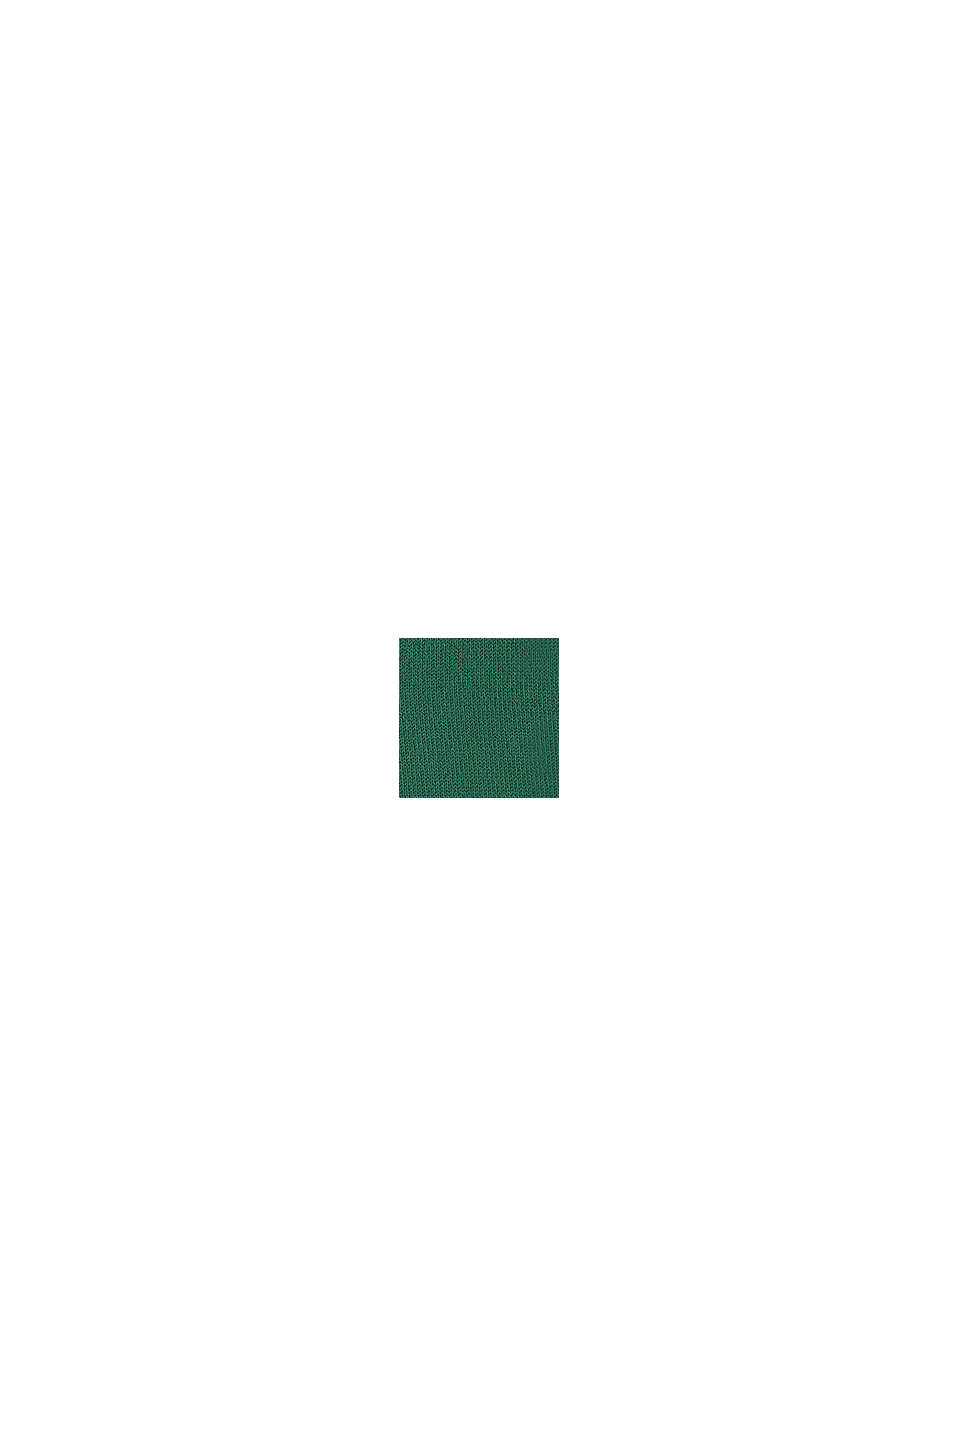 Jersey de algodón con diseño de bloques de color, BOTTLE GREEN, swatch